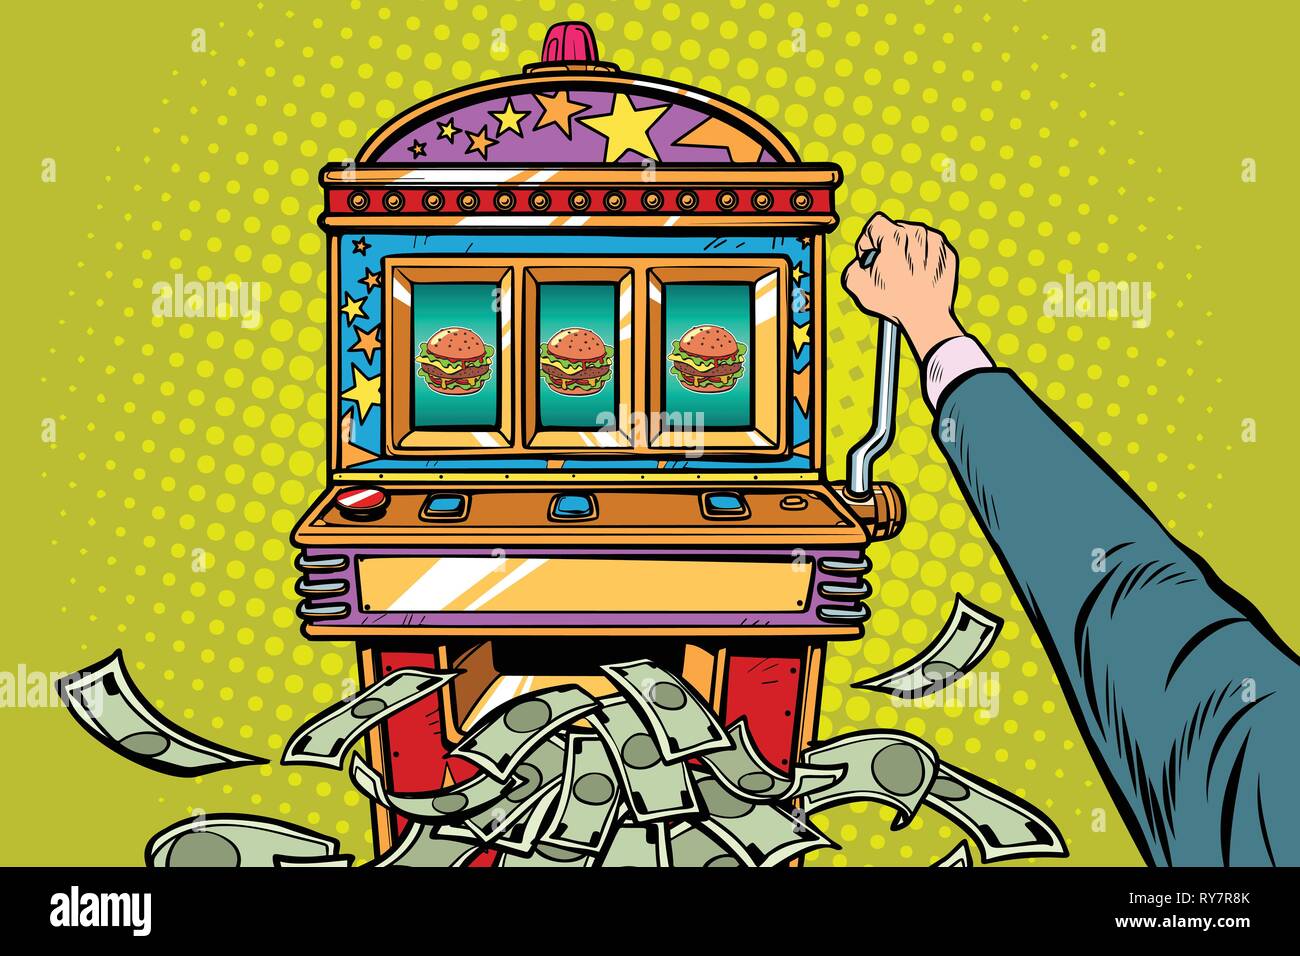 Burger prize slot machine Stock Vector